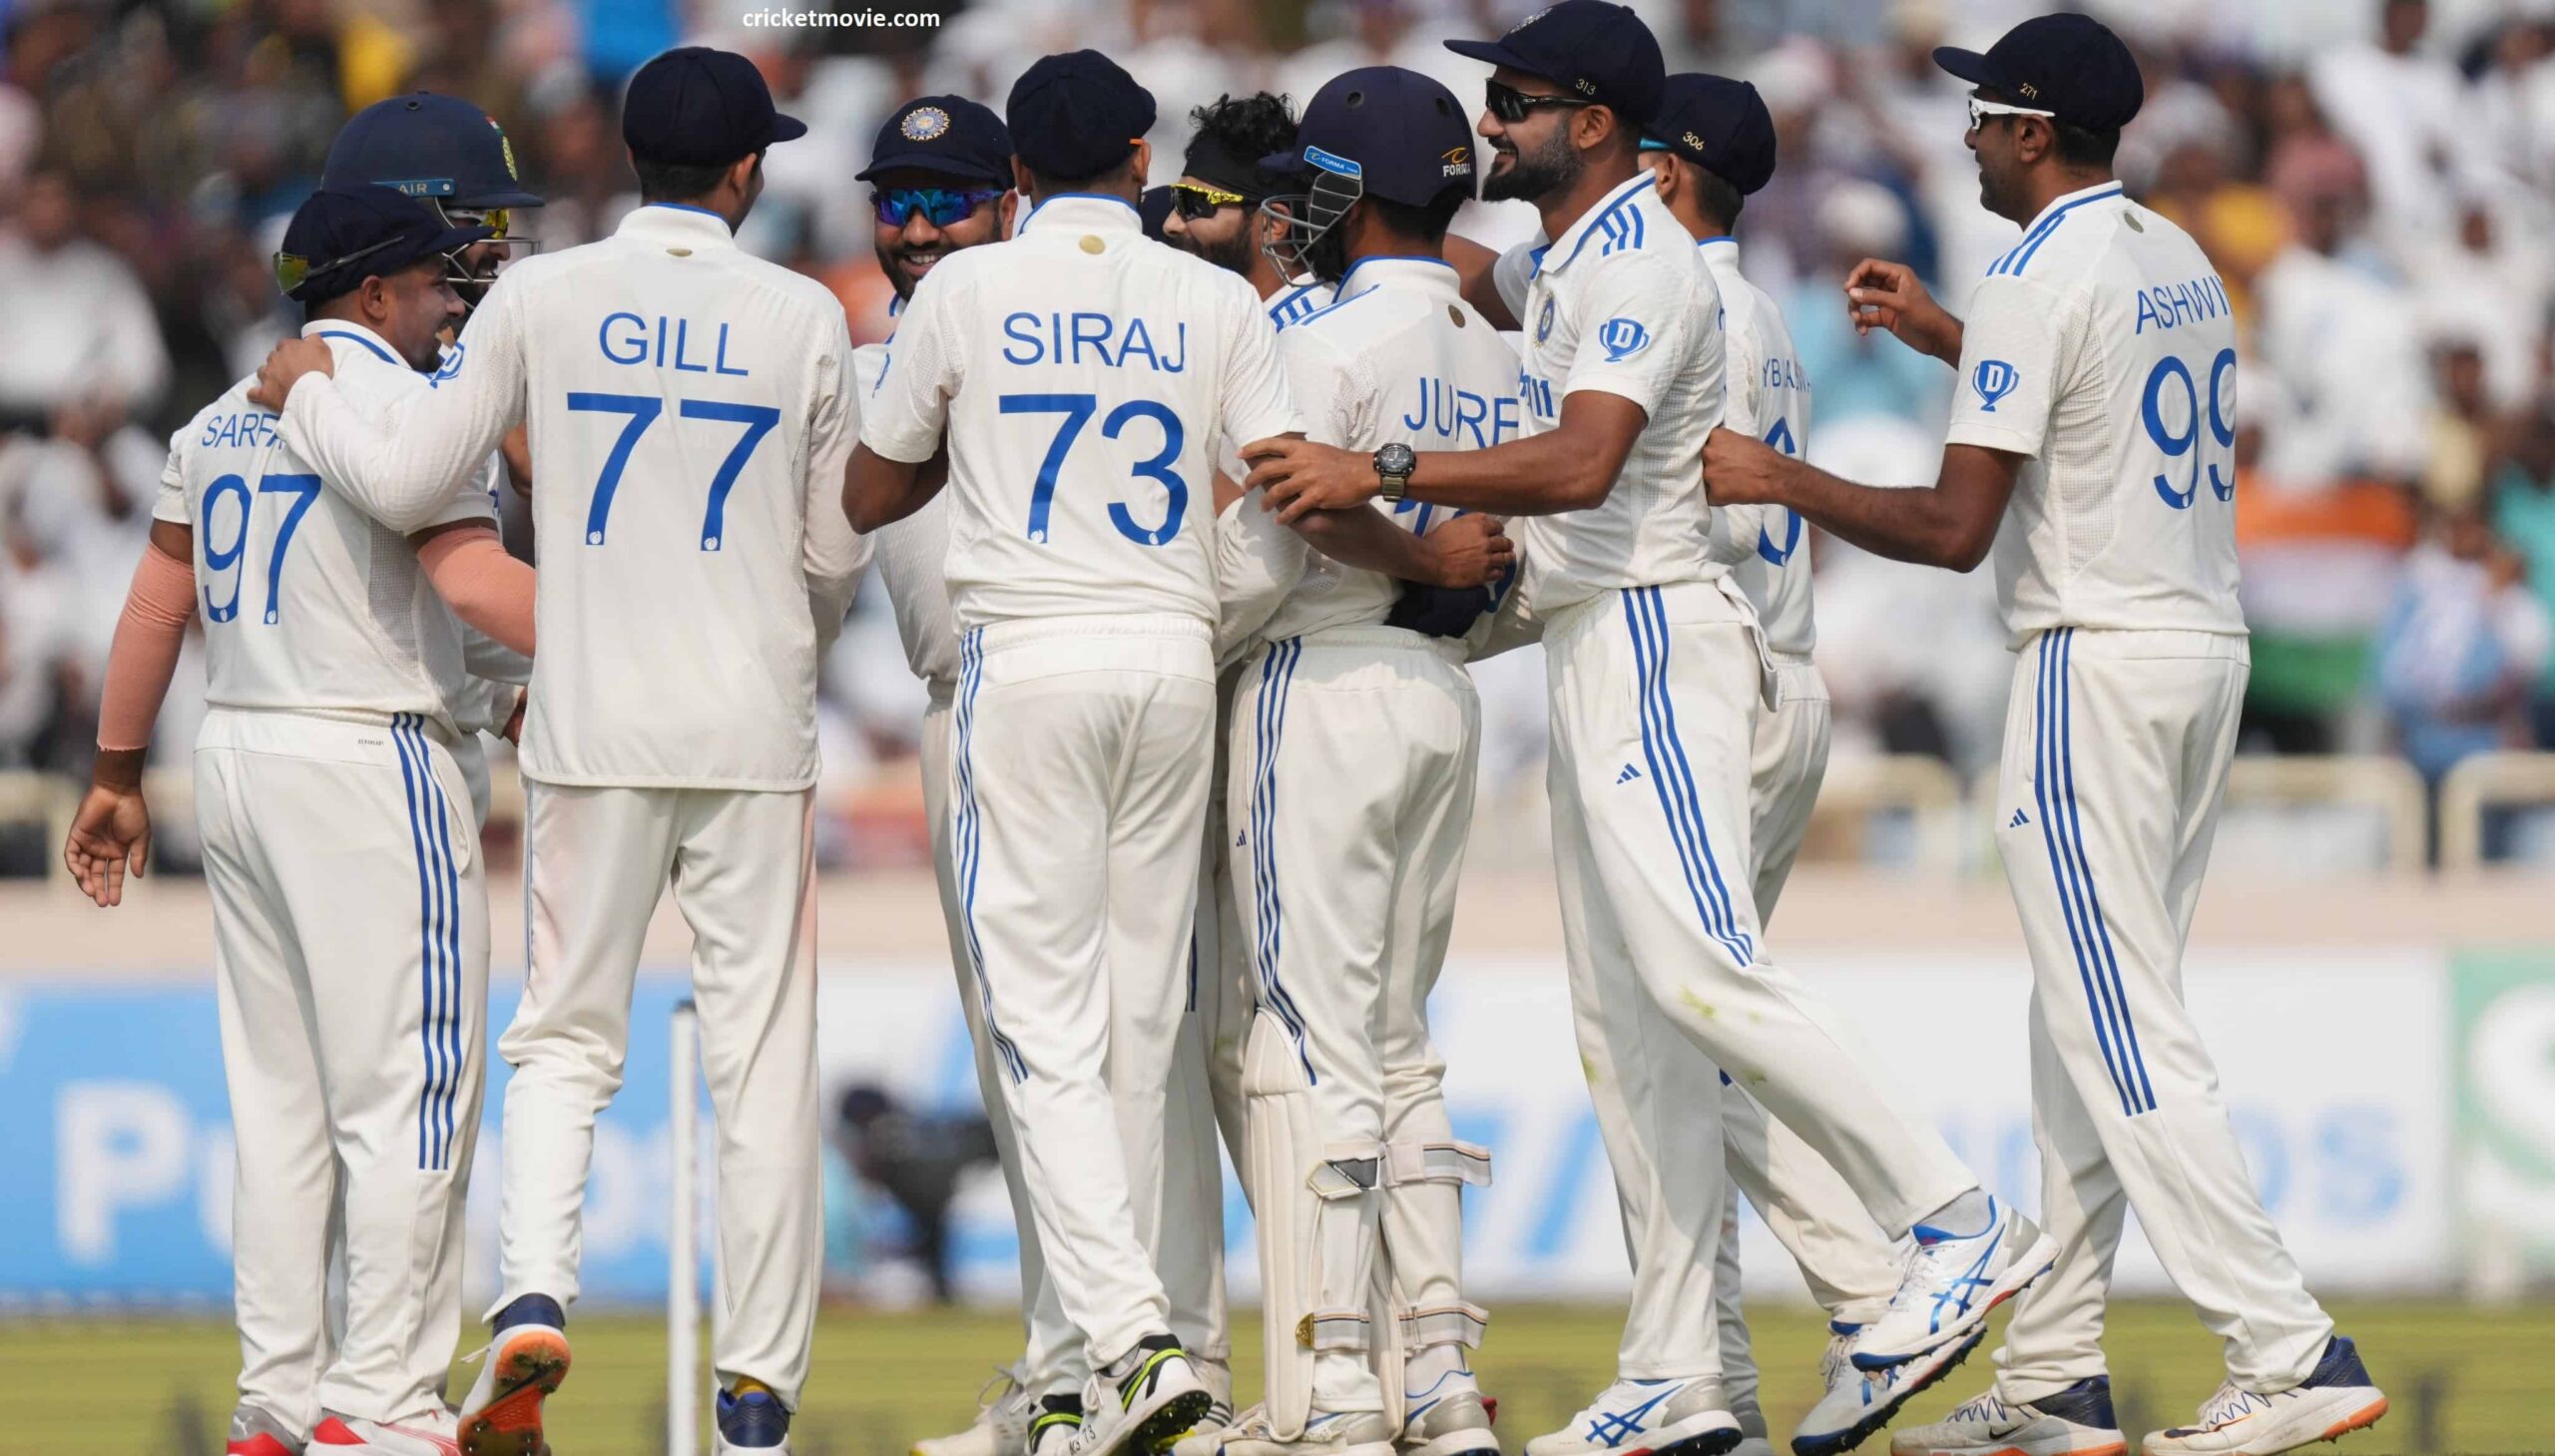 Team India won 4th Test against England at Ranchi-cricketmovie.com